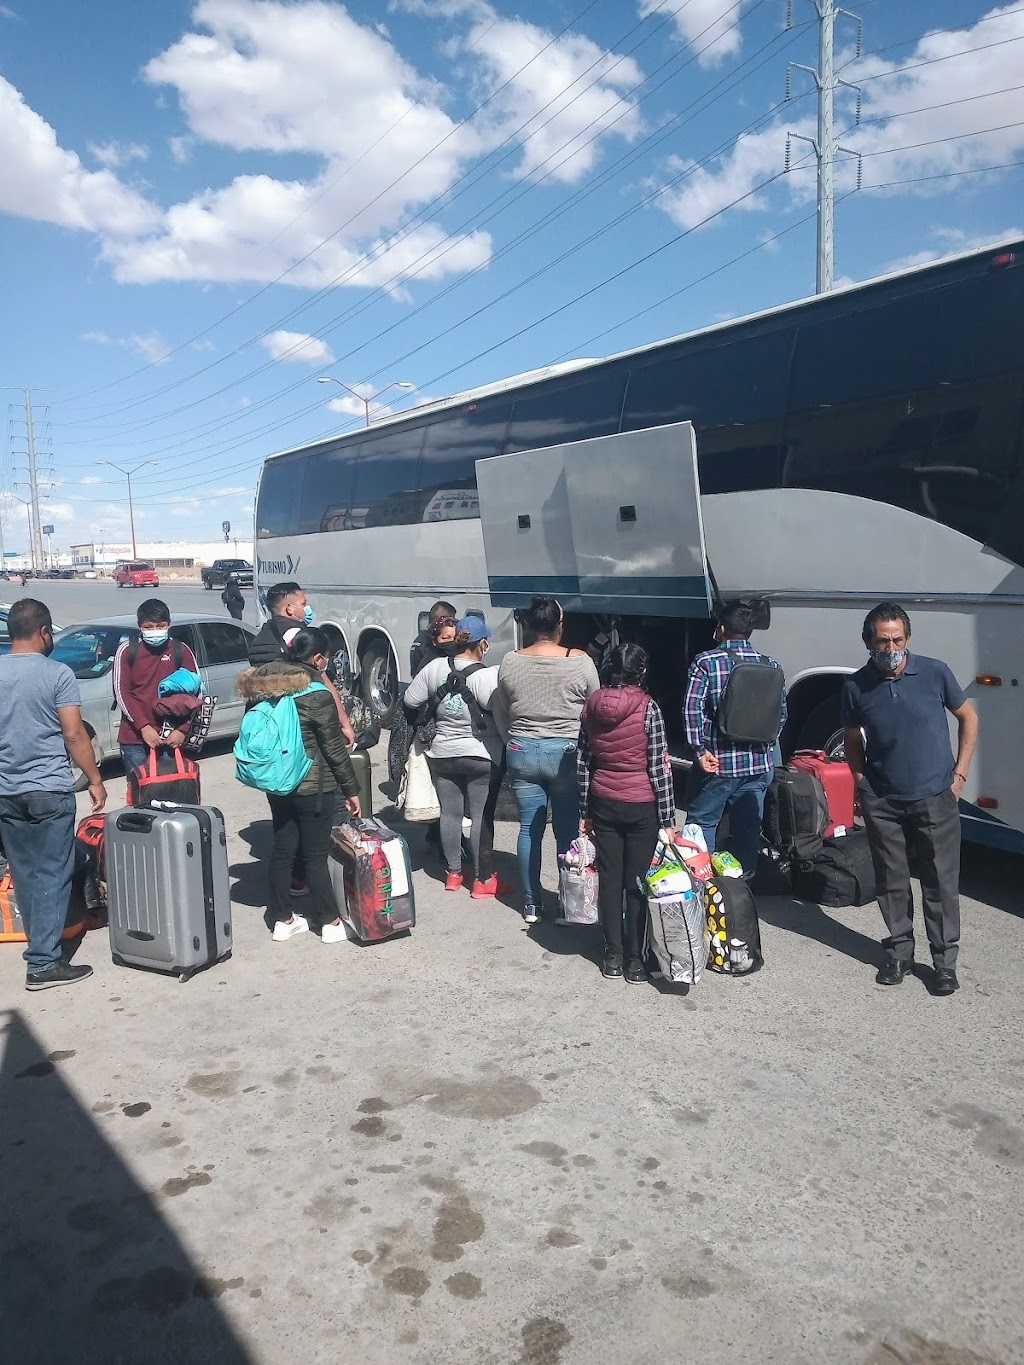 Turismo Lucero | Luis Calderon 2958, 32575 Cd Juárez, Chih., Mexico | Phone: 656 441 2260